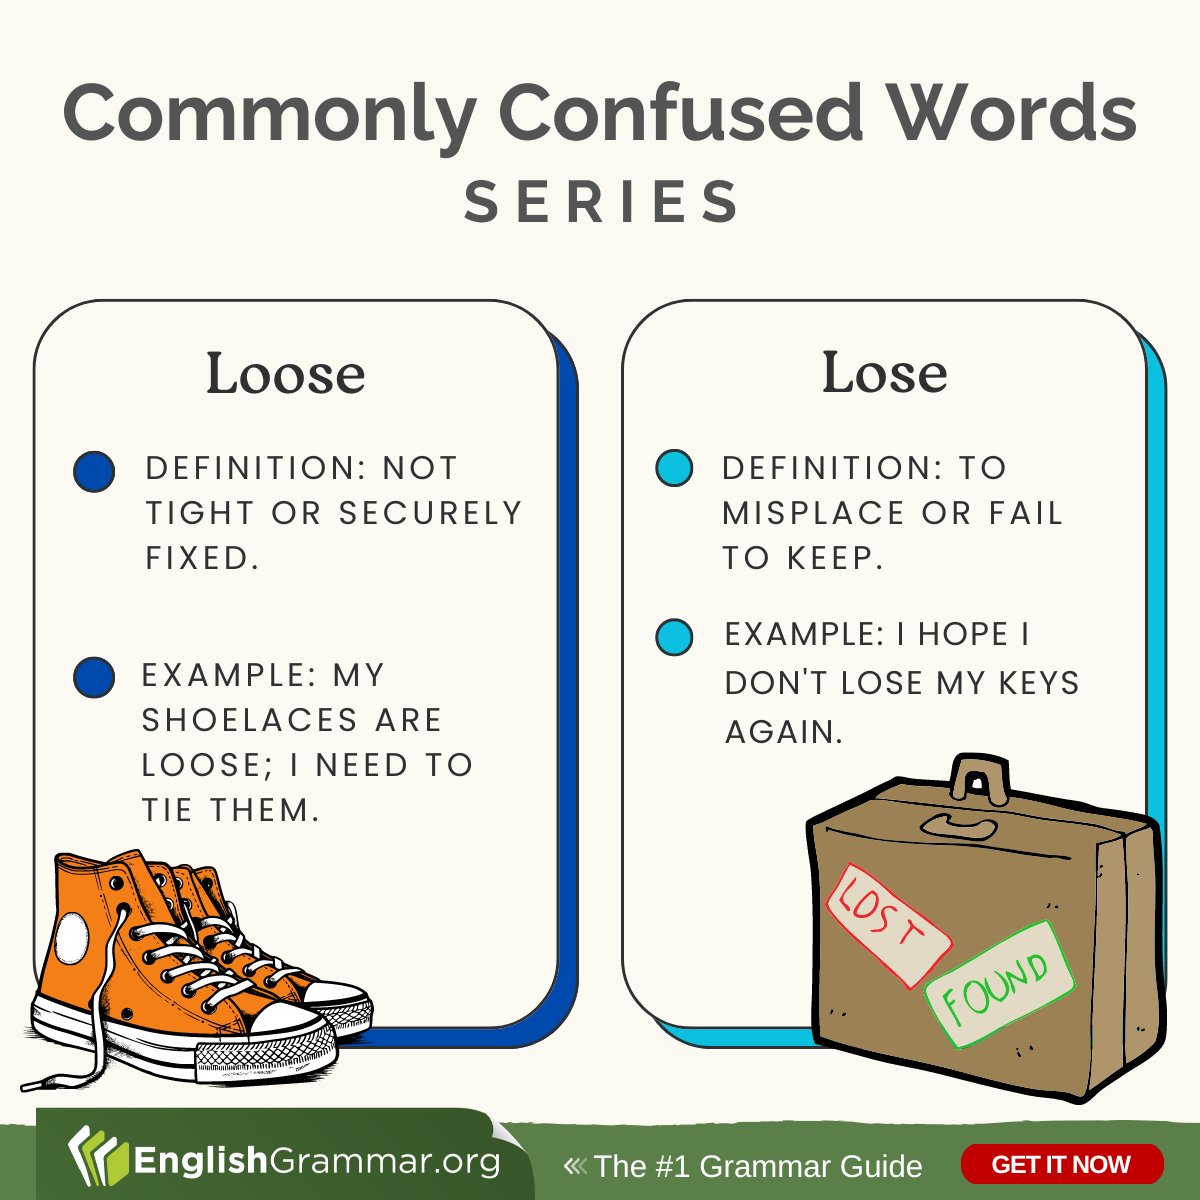 Loose vs. Lose

#vocabulary #writing #amwriting